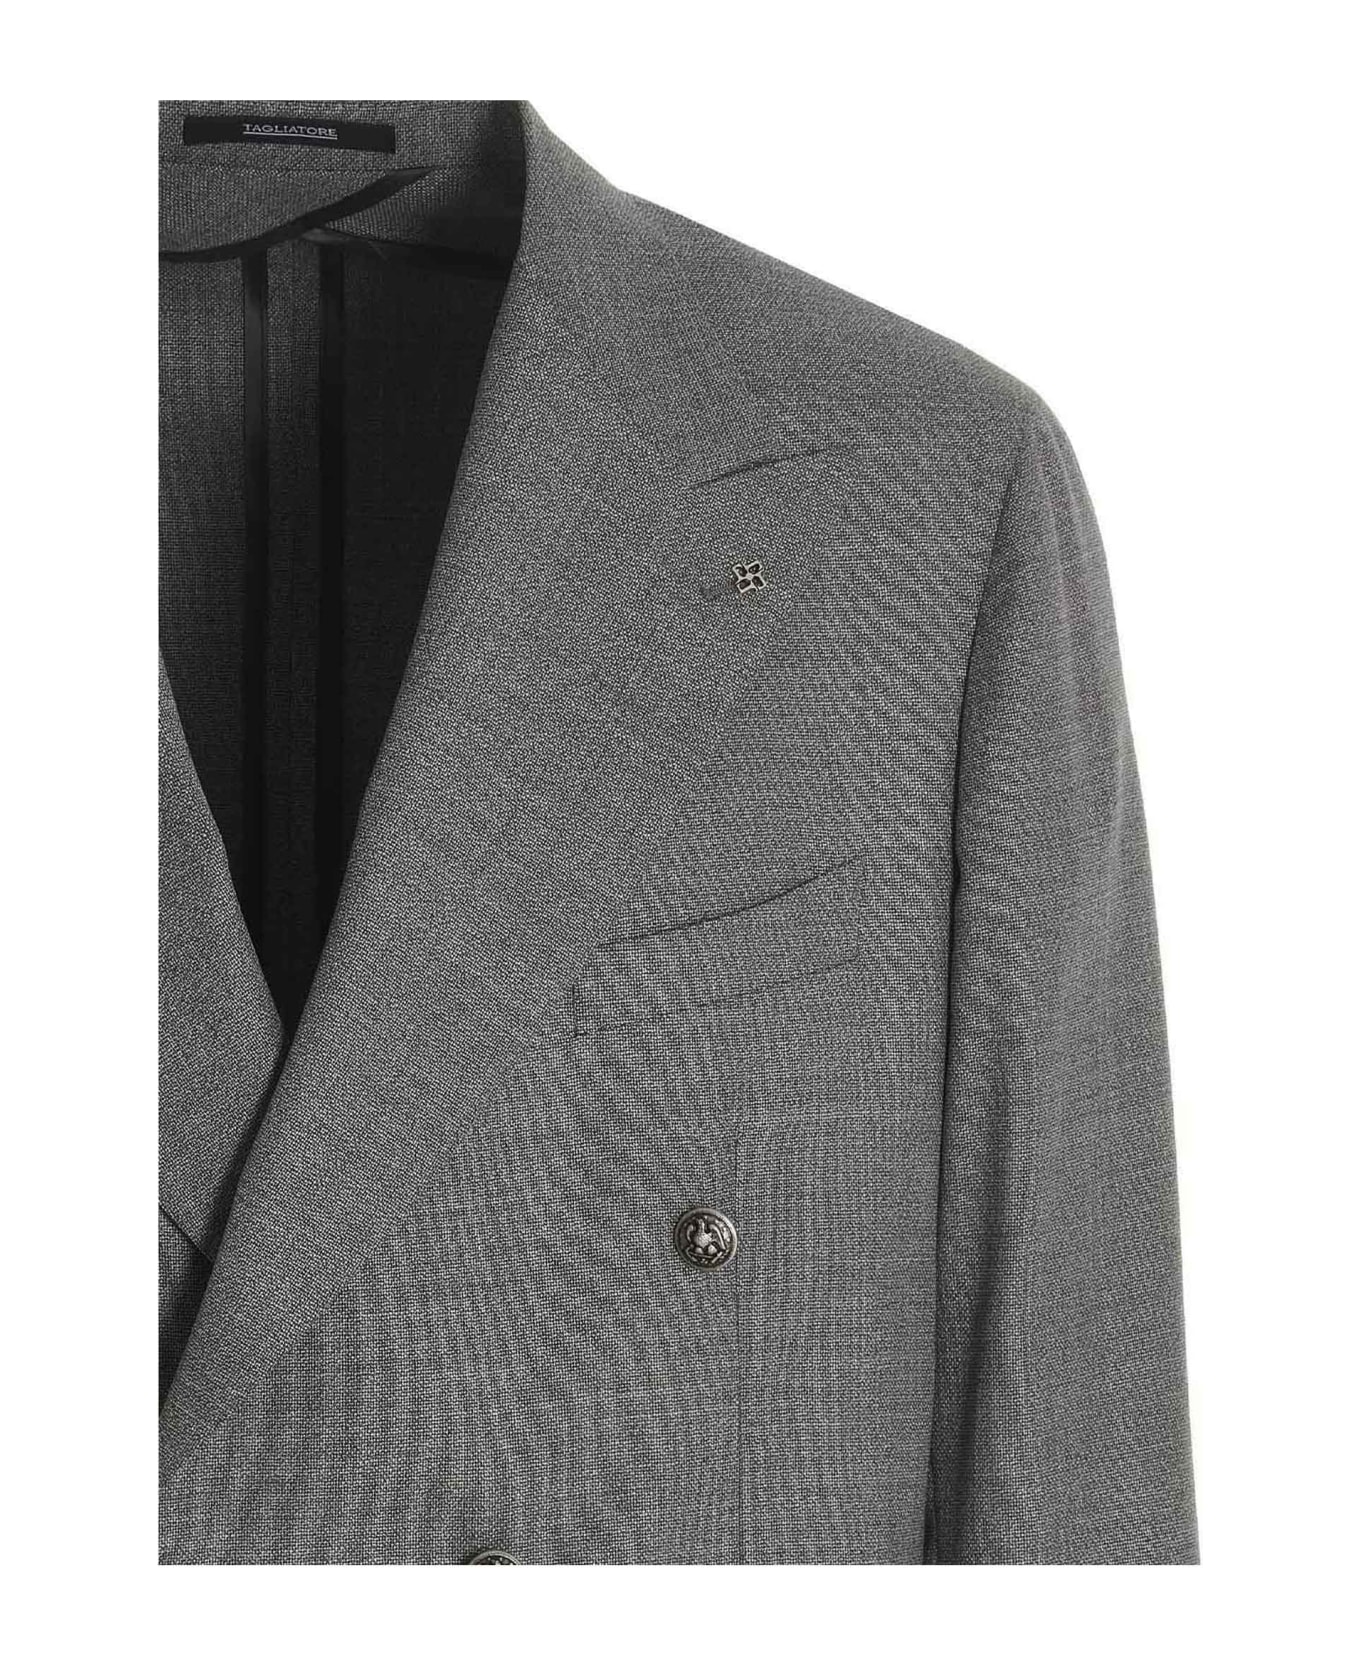 Tagliatore 'montecarlo' Blazer Jacket - Gray